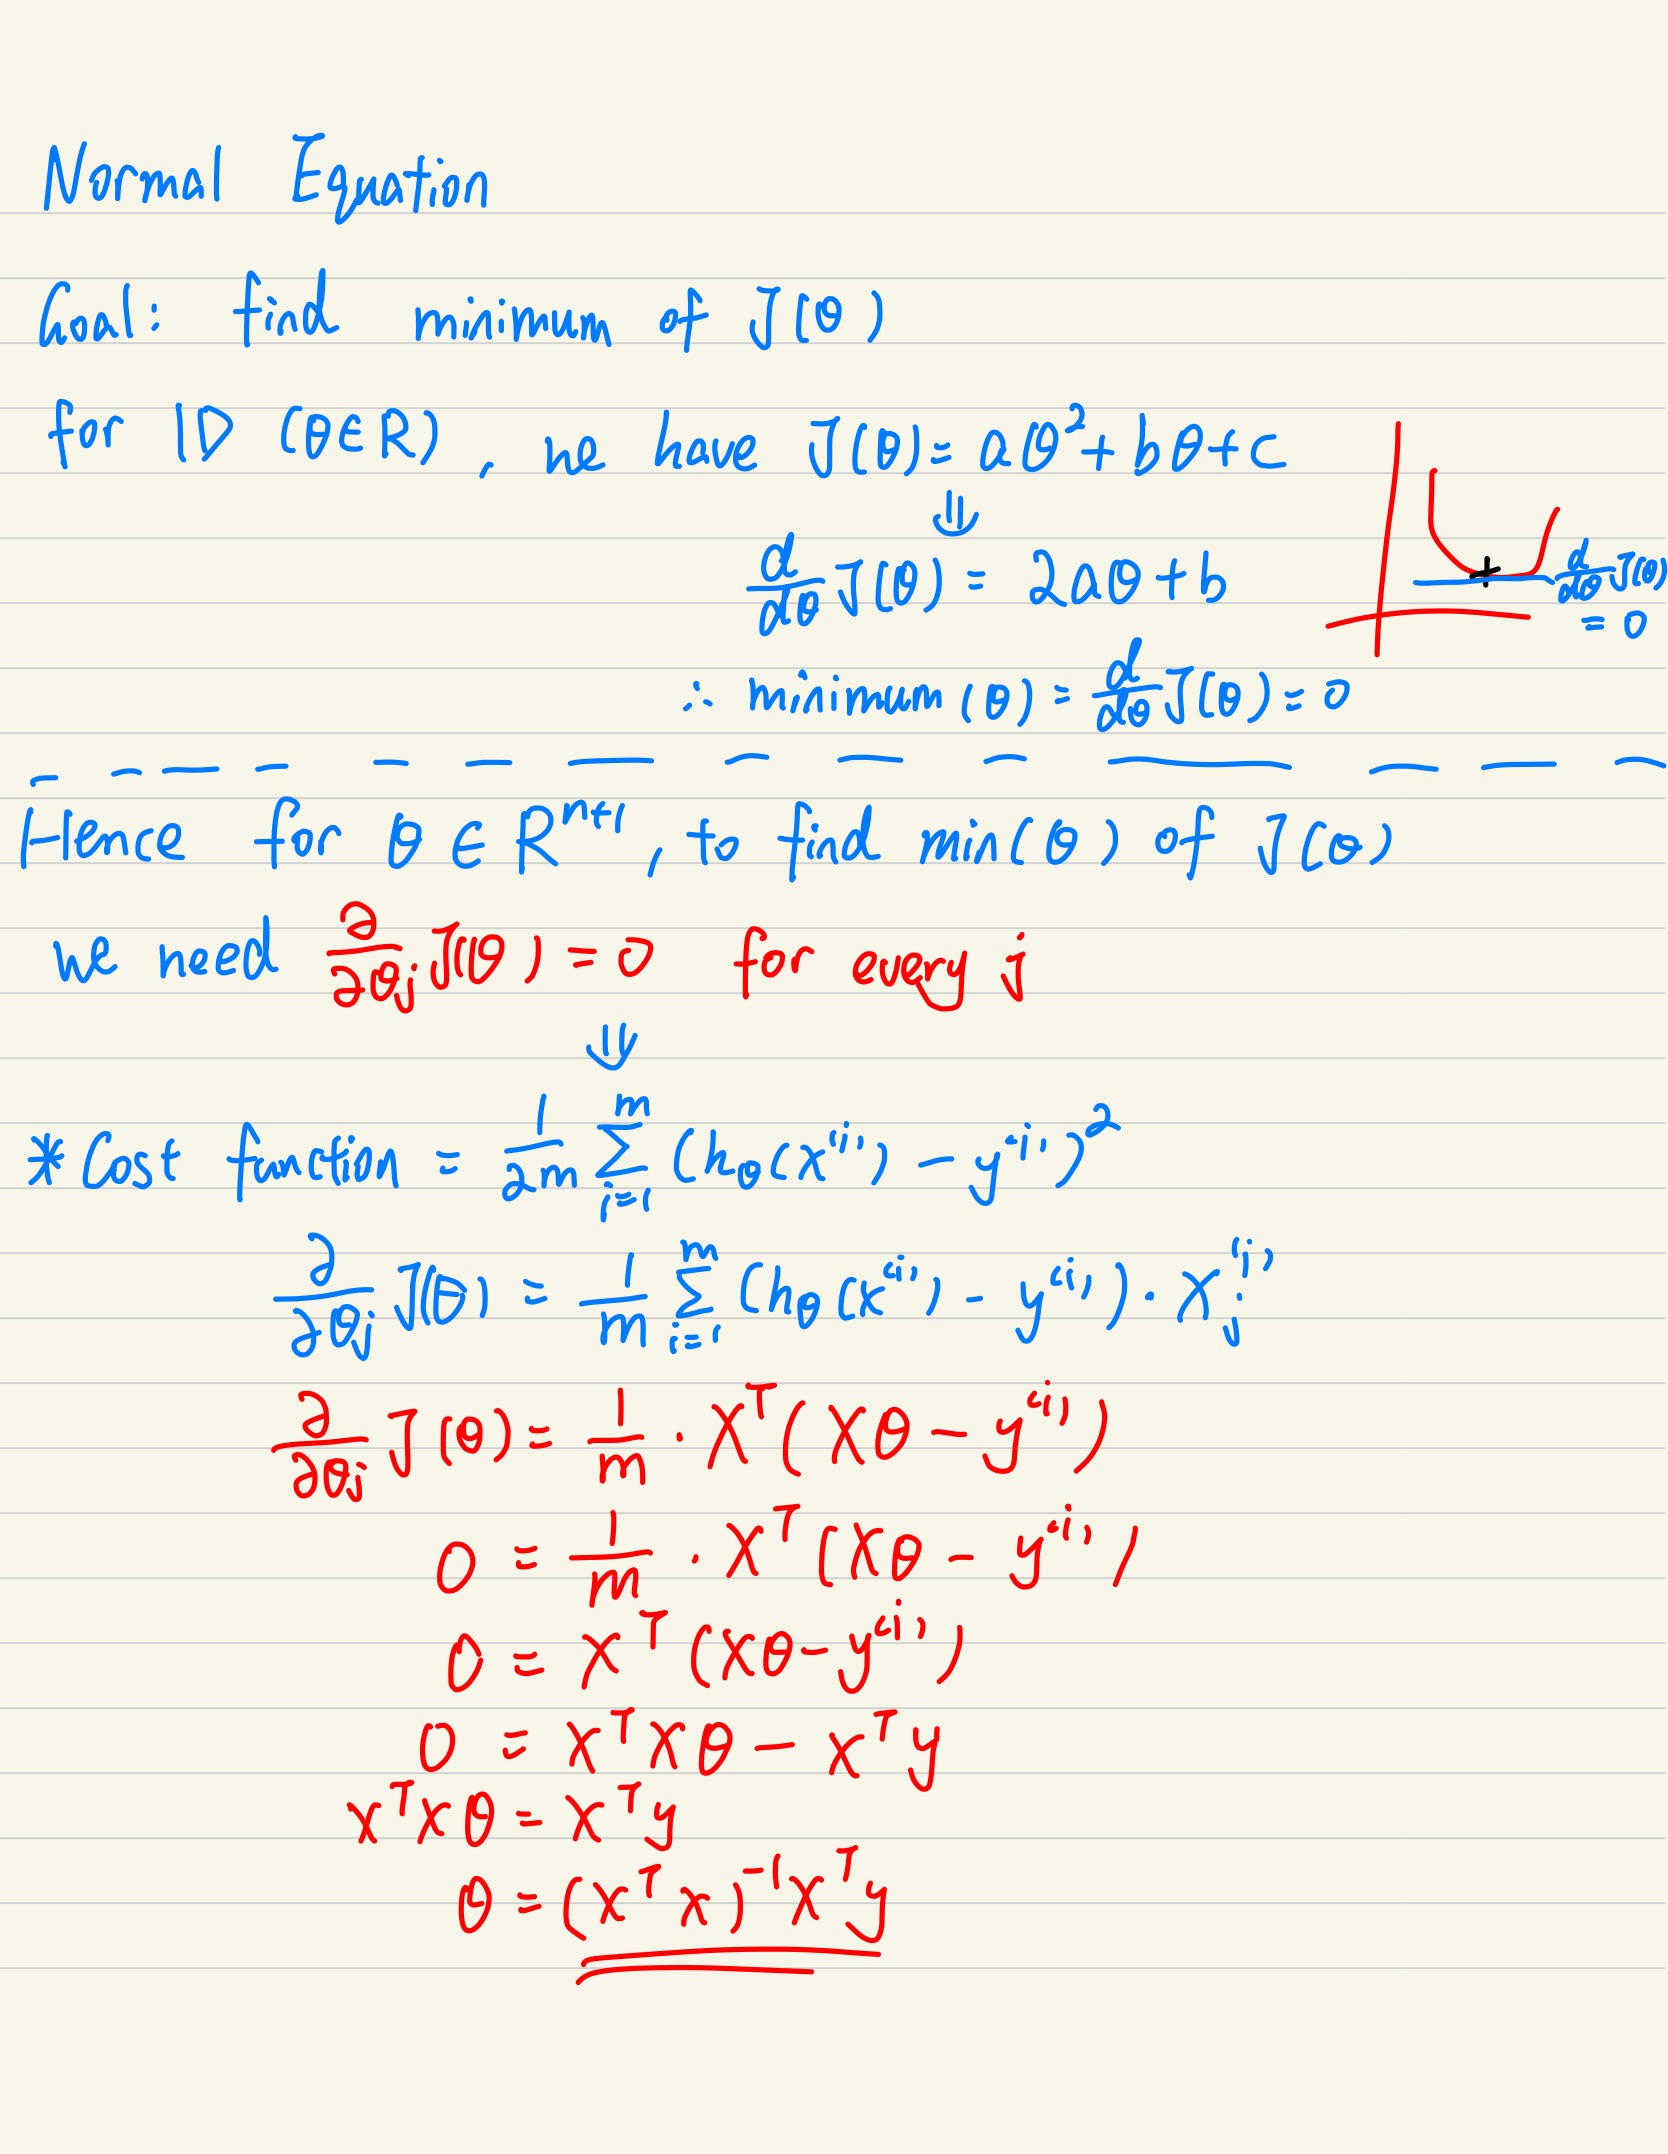 normal_equation_pf1